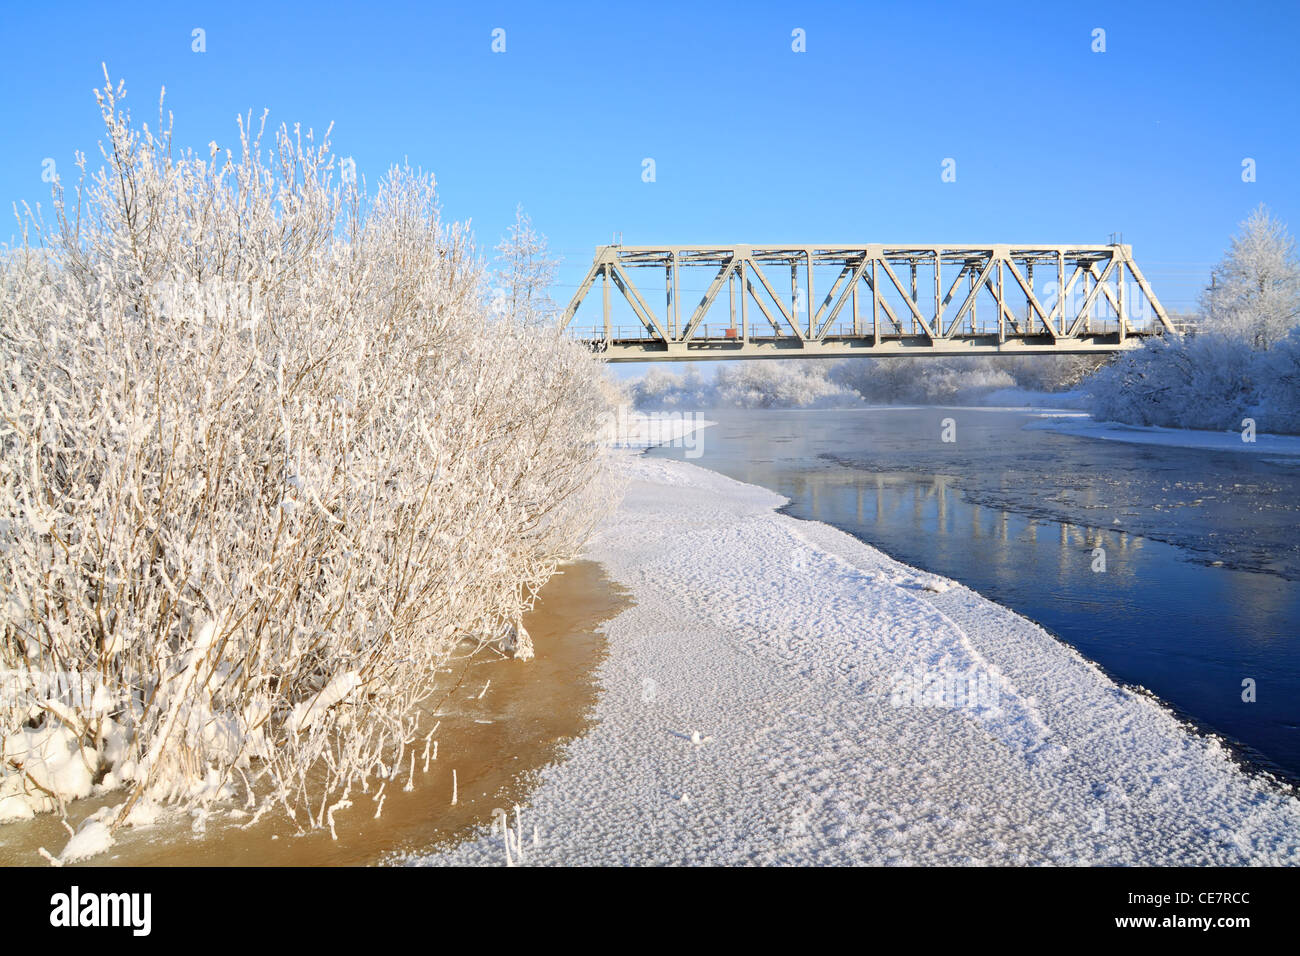 railway bridge on winter river Stock Photo